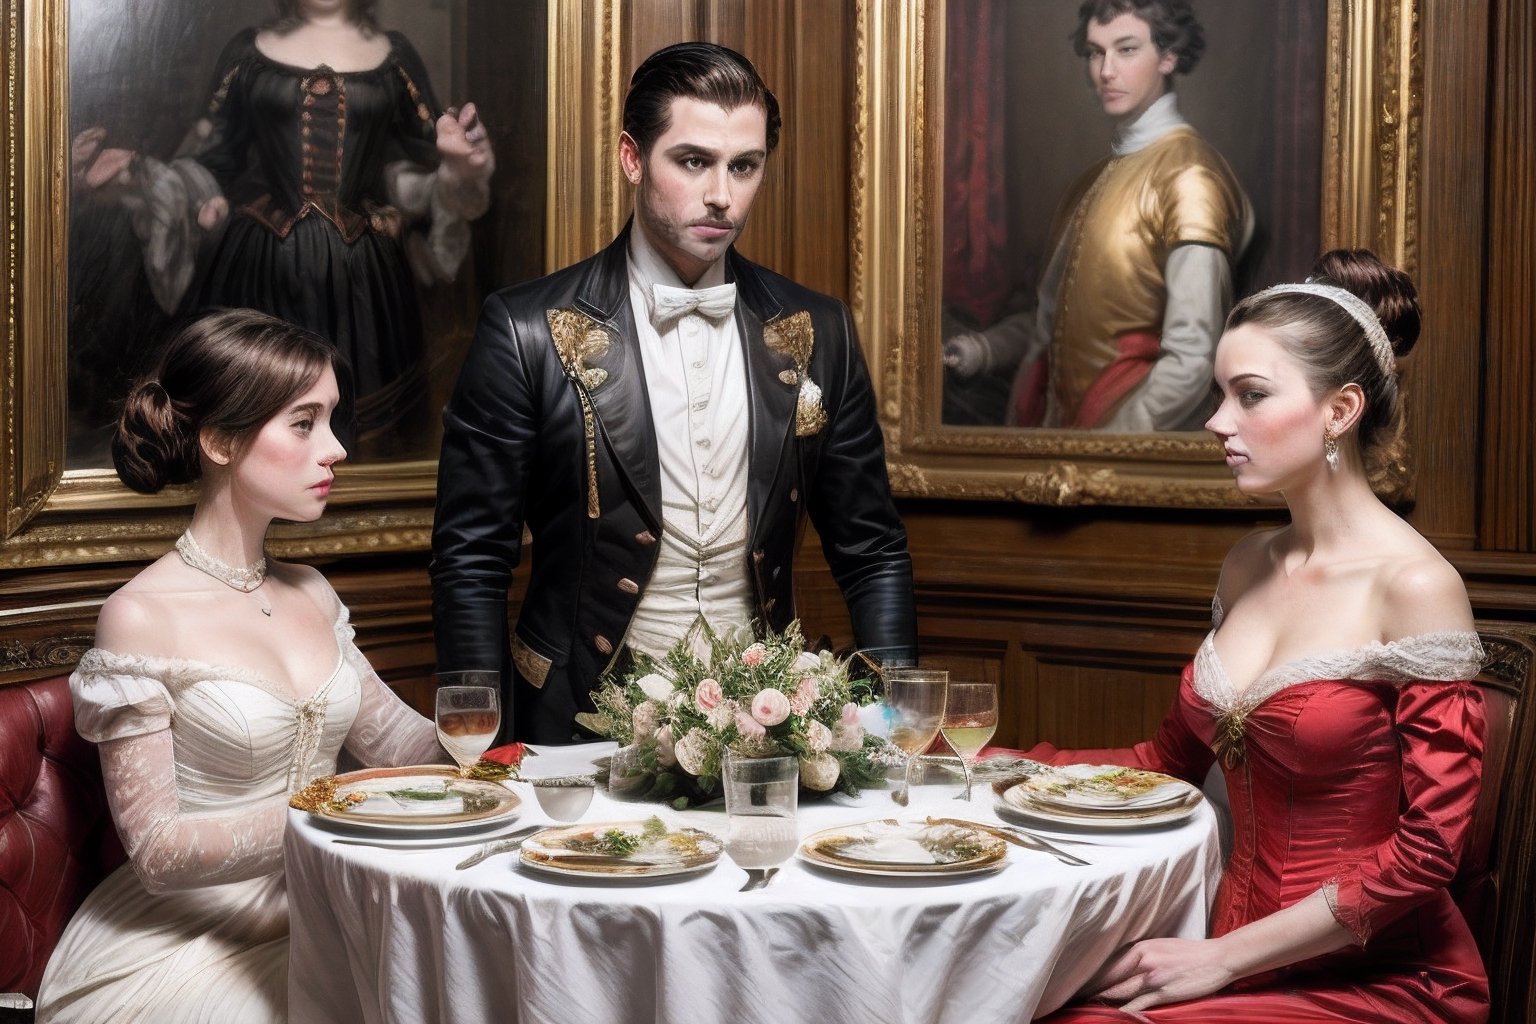 Realistic, Beautiful Women, noble banquet, 1boy handsome men, Rococo Style, 
,Rococo Style